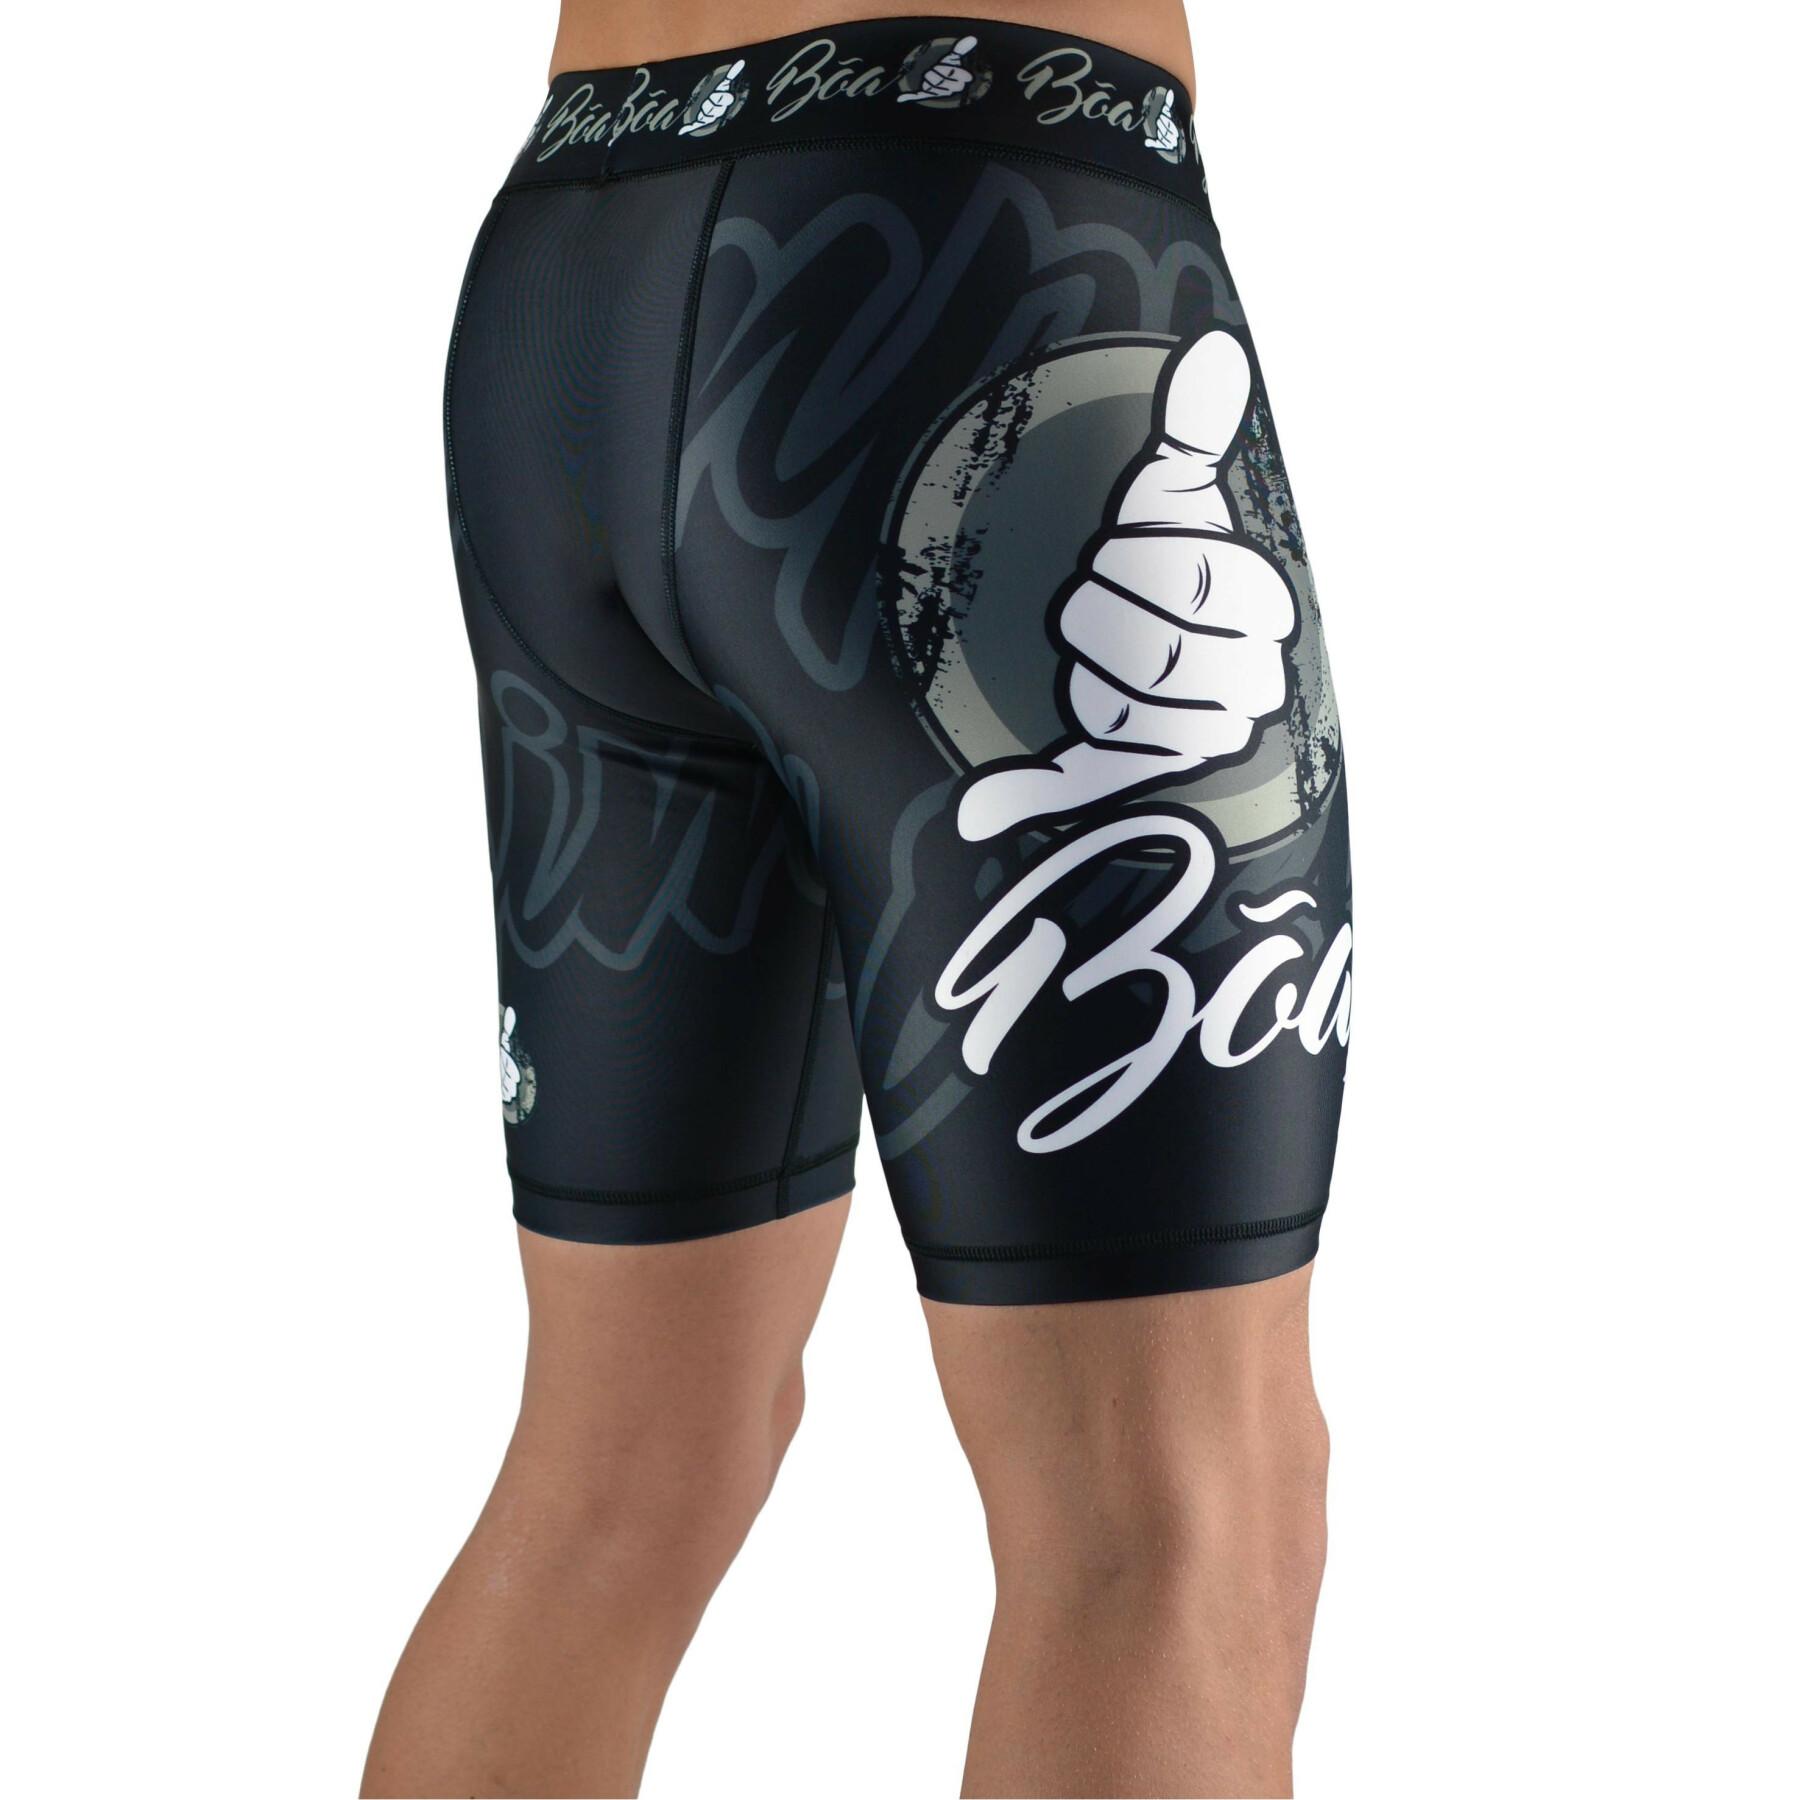 Pantalones cortos de compresión Bõa Frente 2.0